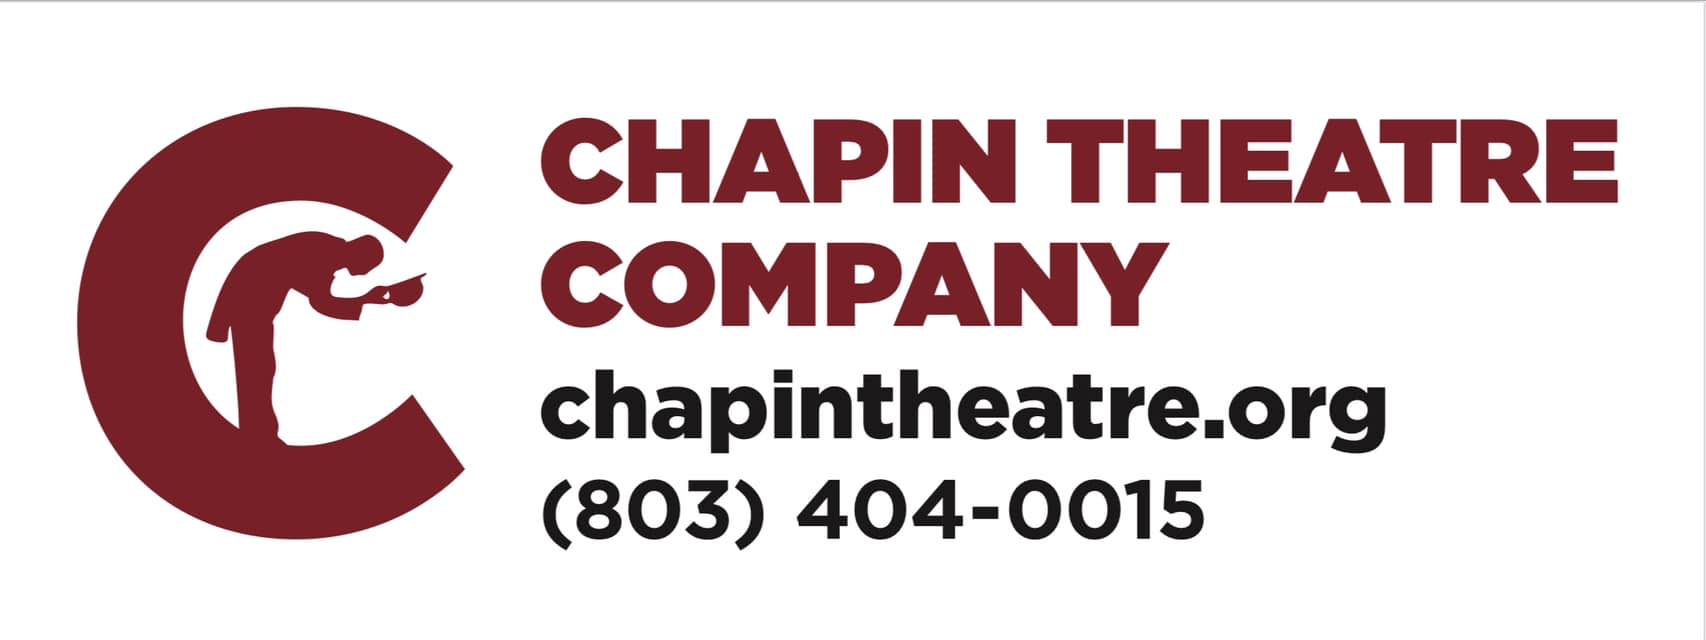 Chapin Theatre Company. ChapinTheatre.org. (803) 404-0015.